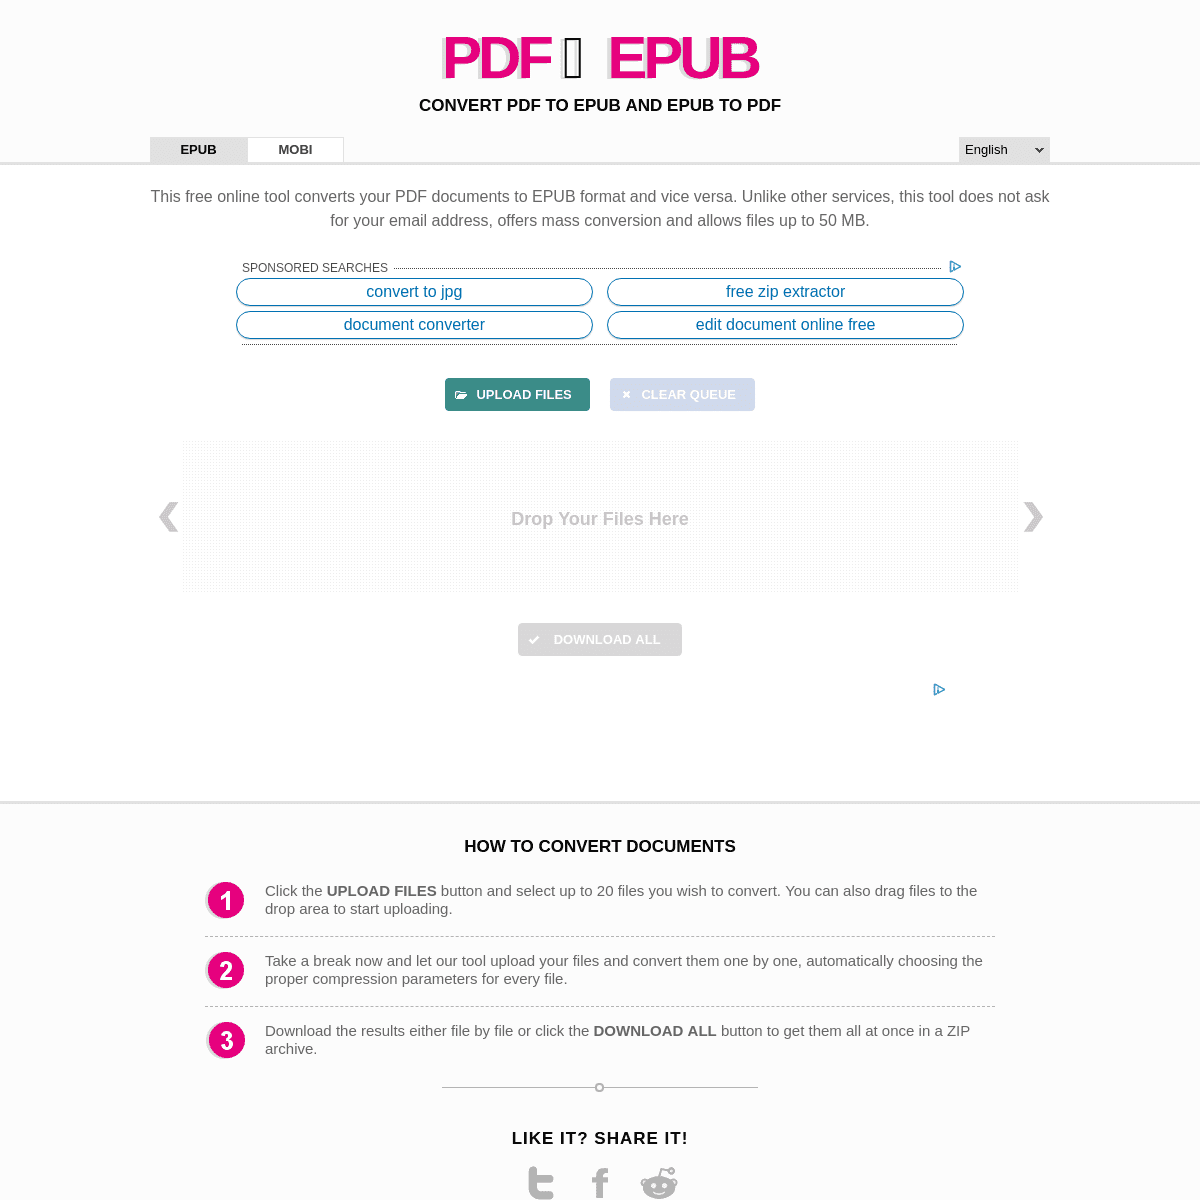 A complete backup of pdfepub.com